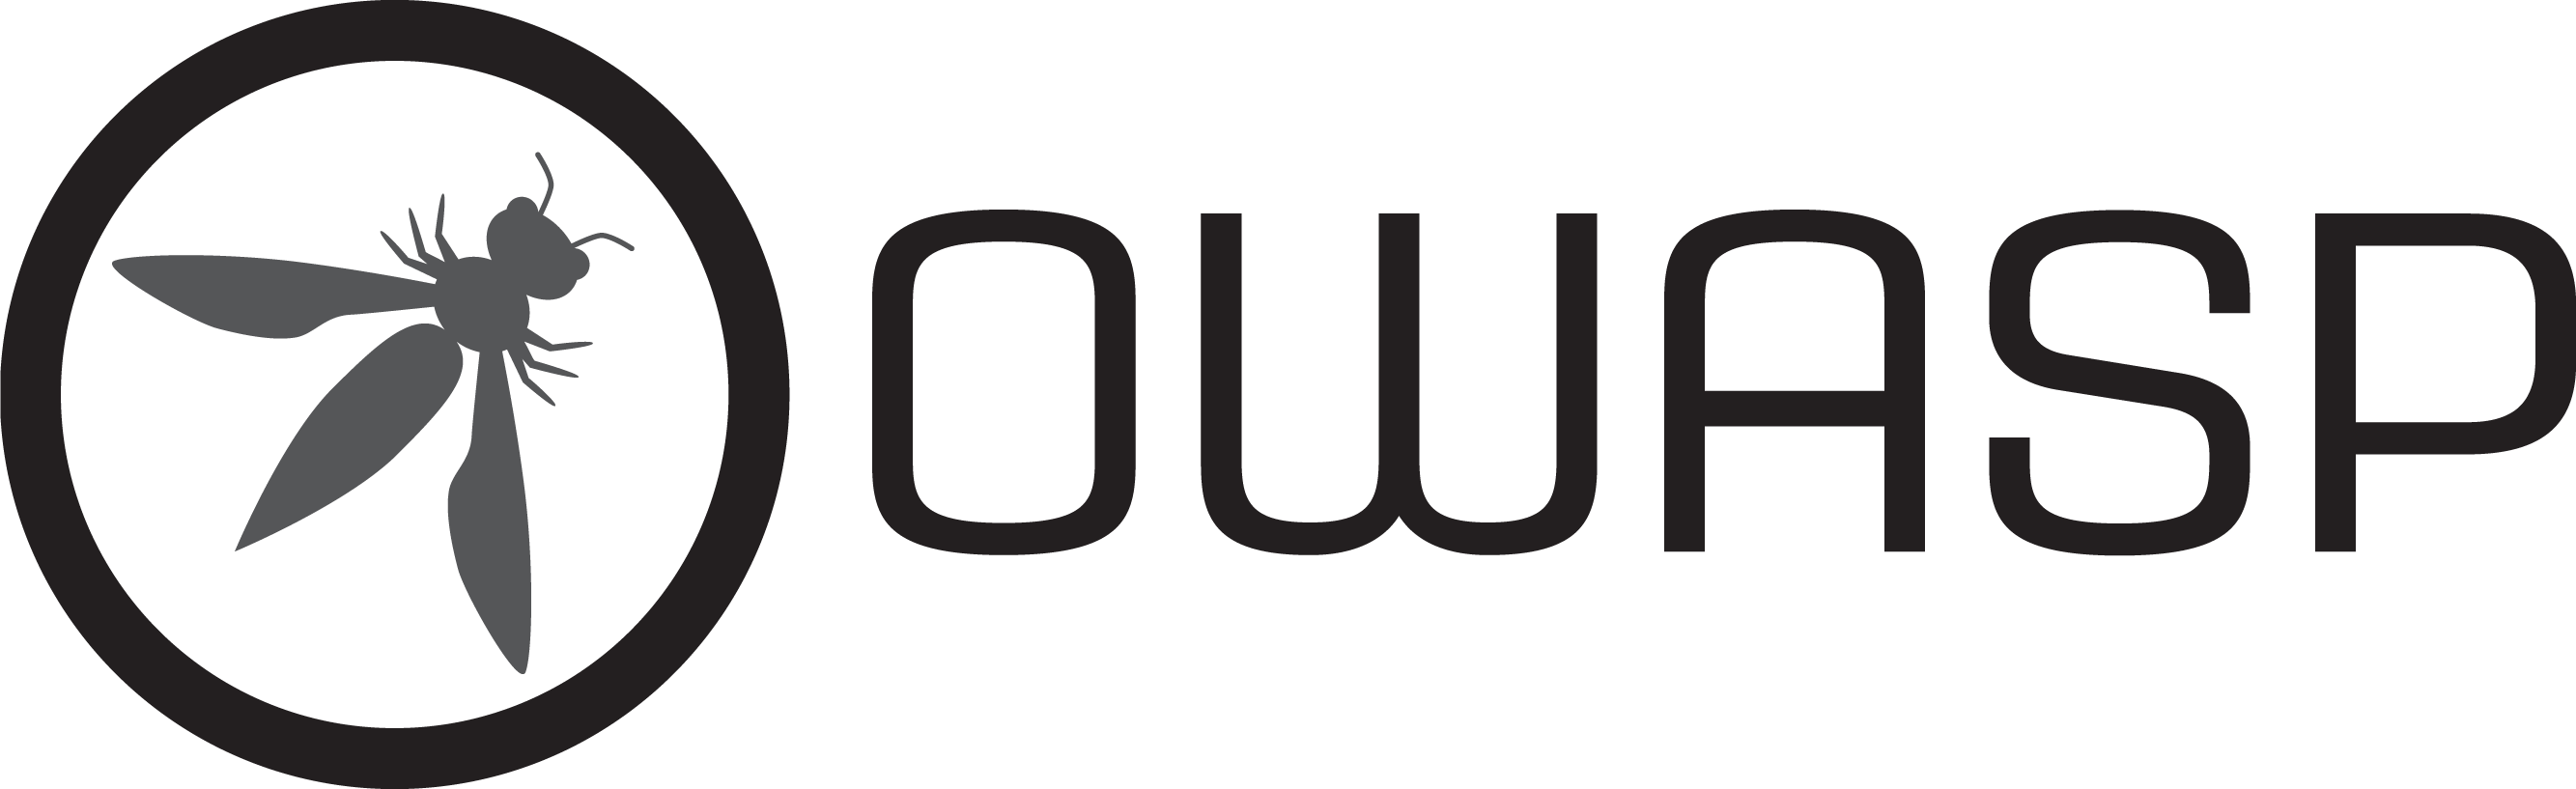 owasp logo